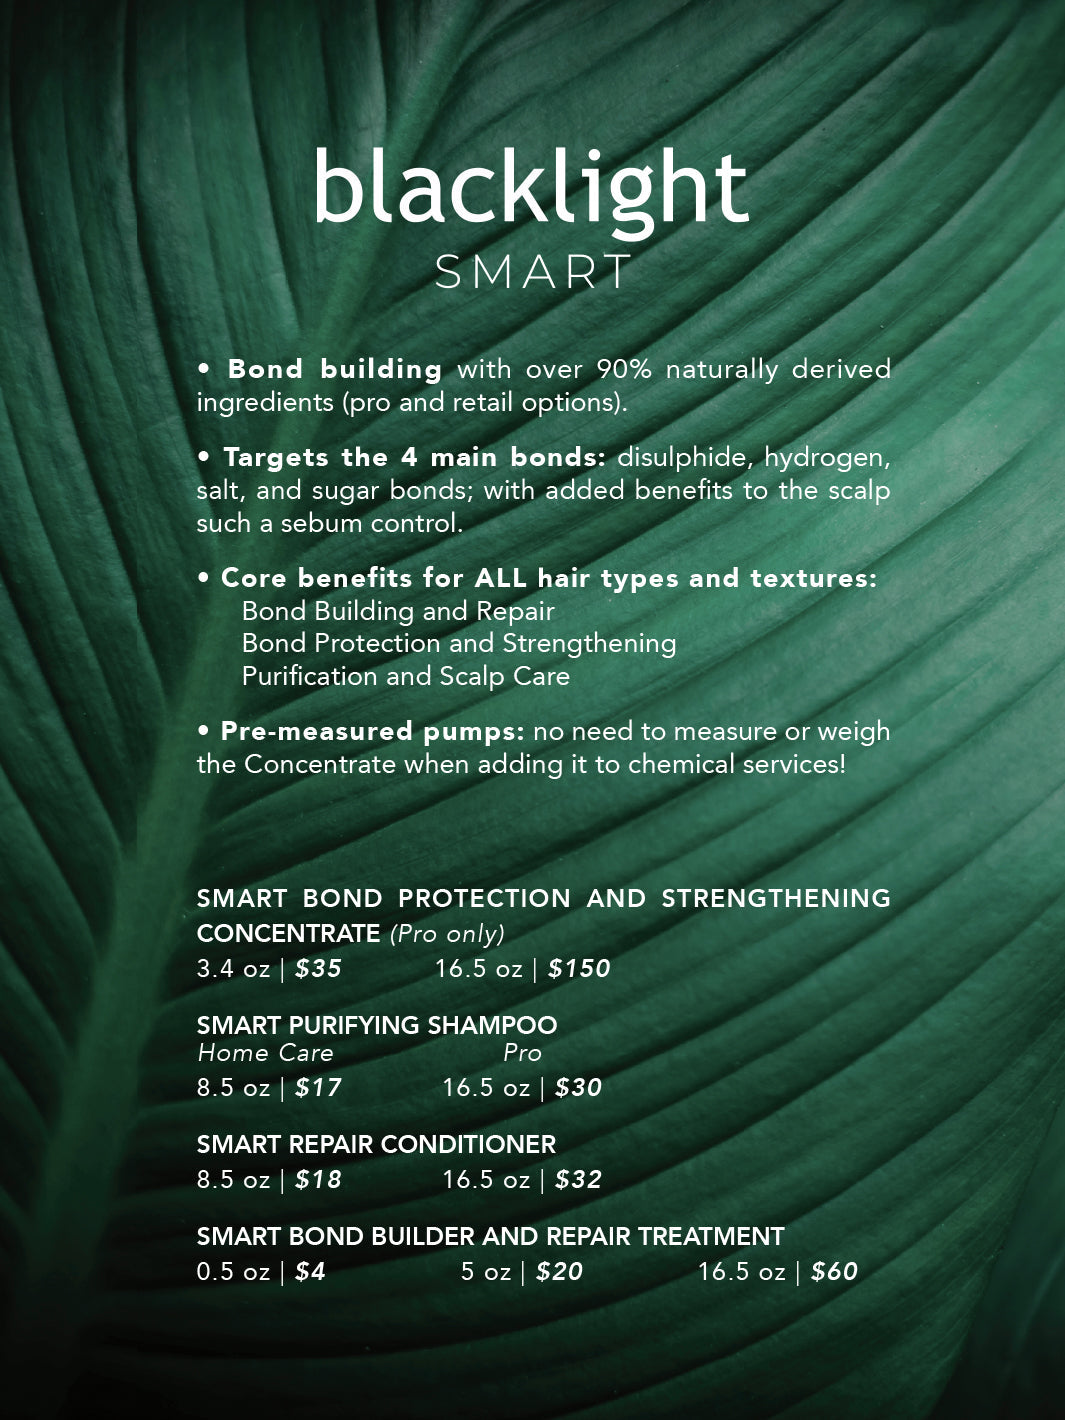 Oligo Blacklight Smart Bond Builder and Repair Treatment